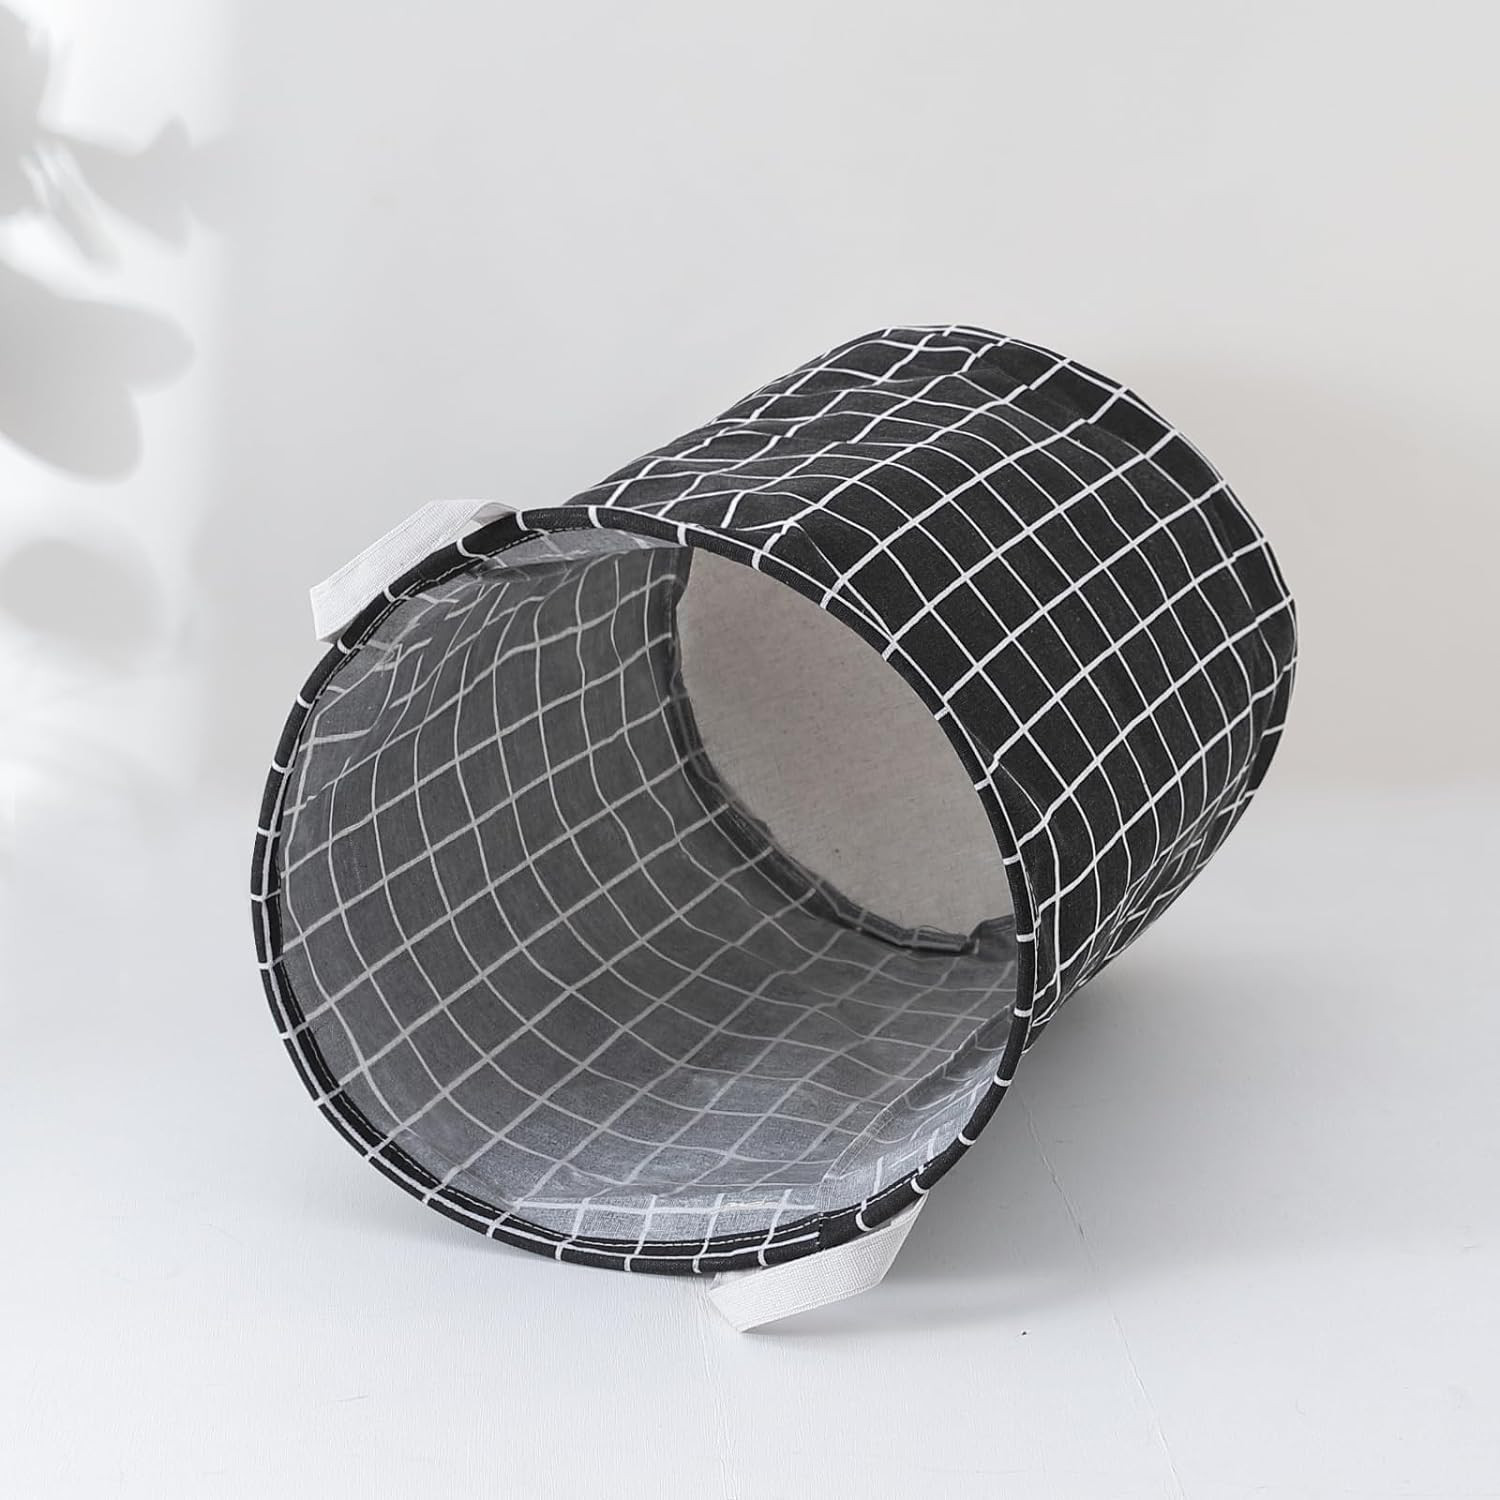 Kuber Industries Foldable Storage Basket|Round Toy Storage Bin|Side Grab Handle|Wardrobe, Closet Organizer (Black)